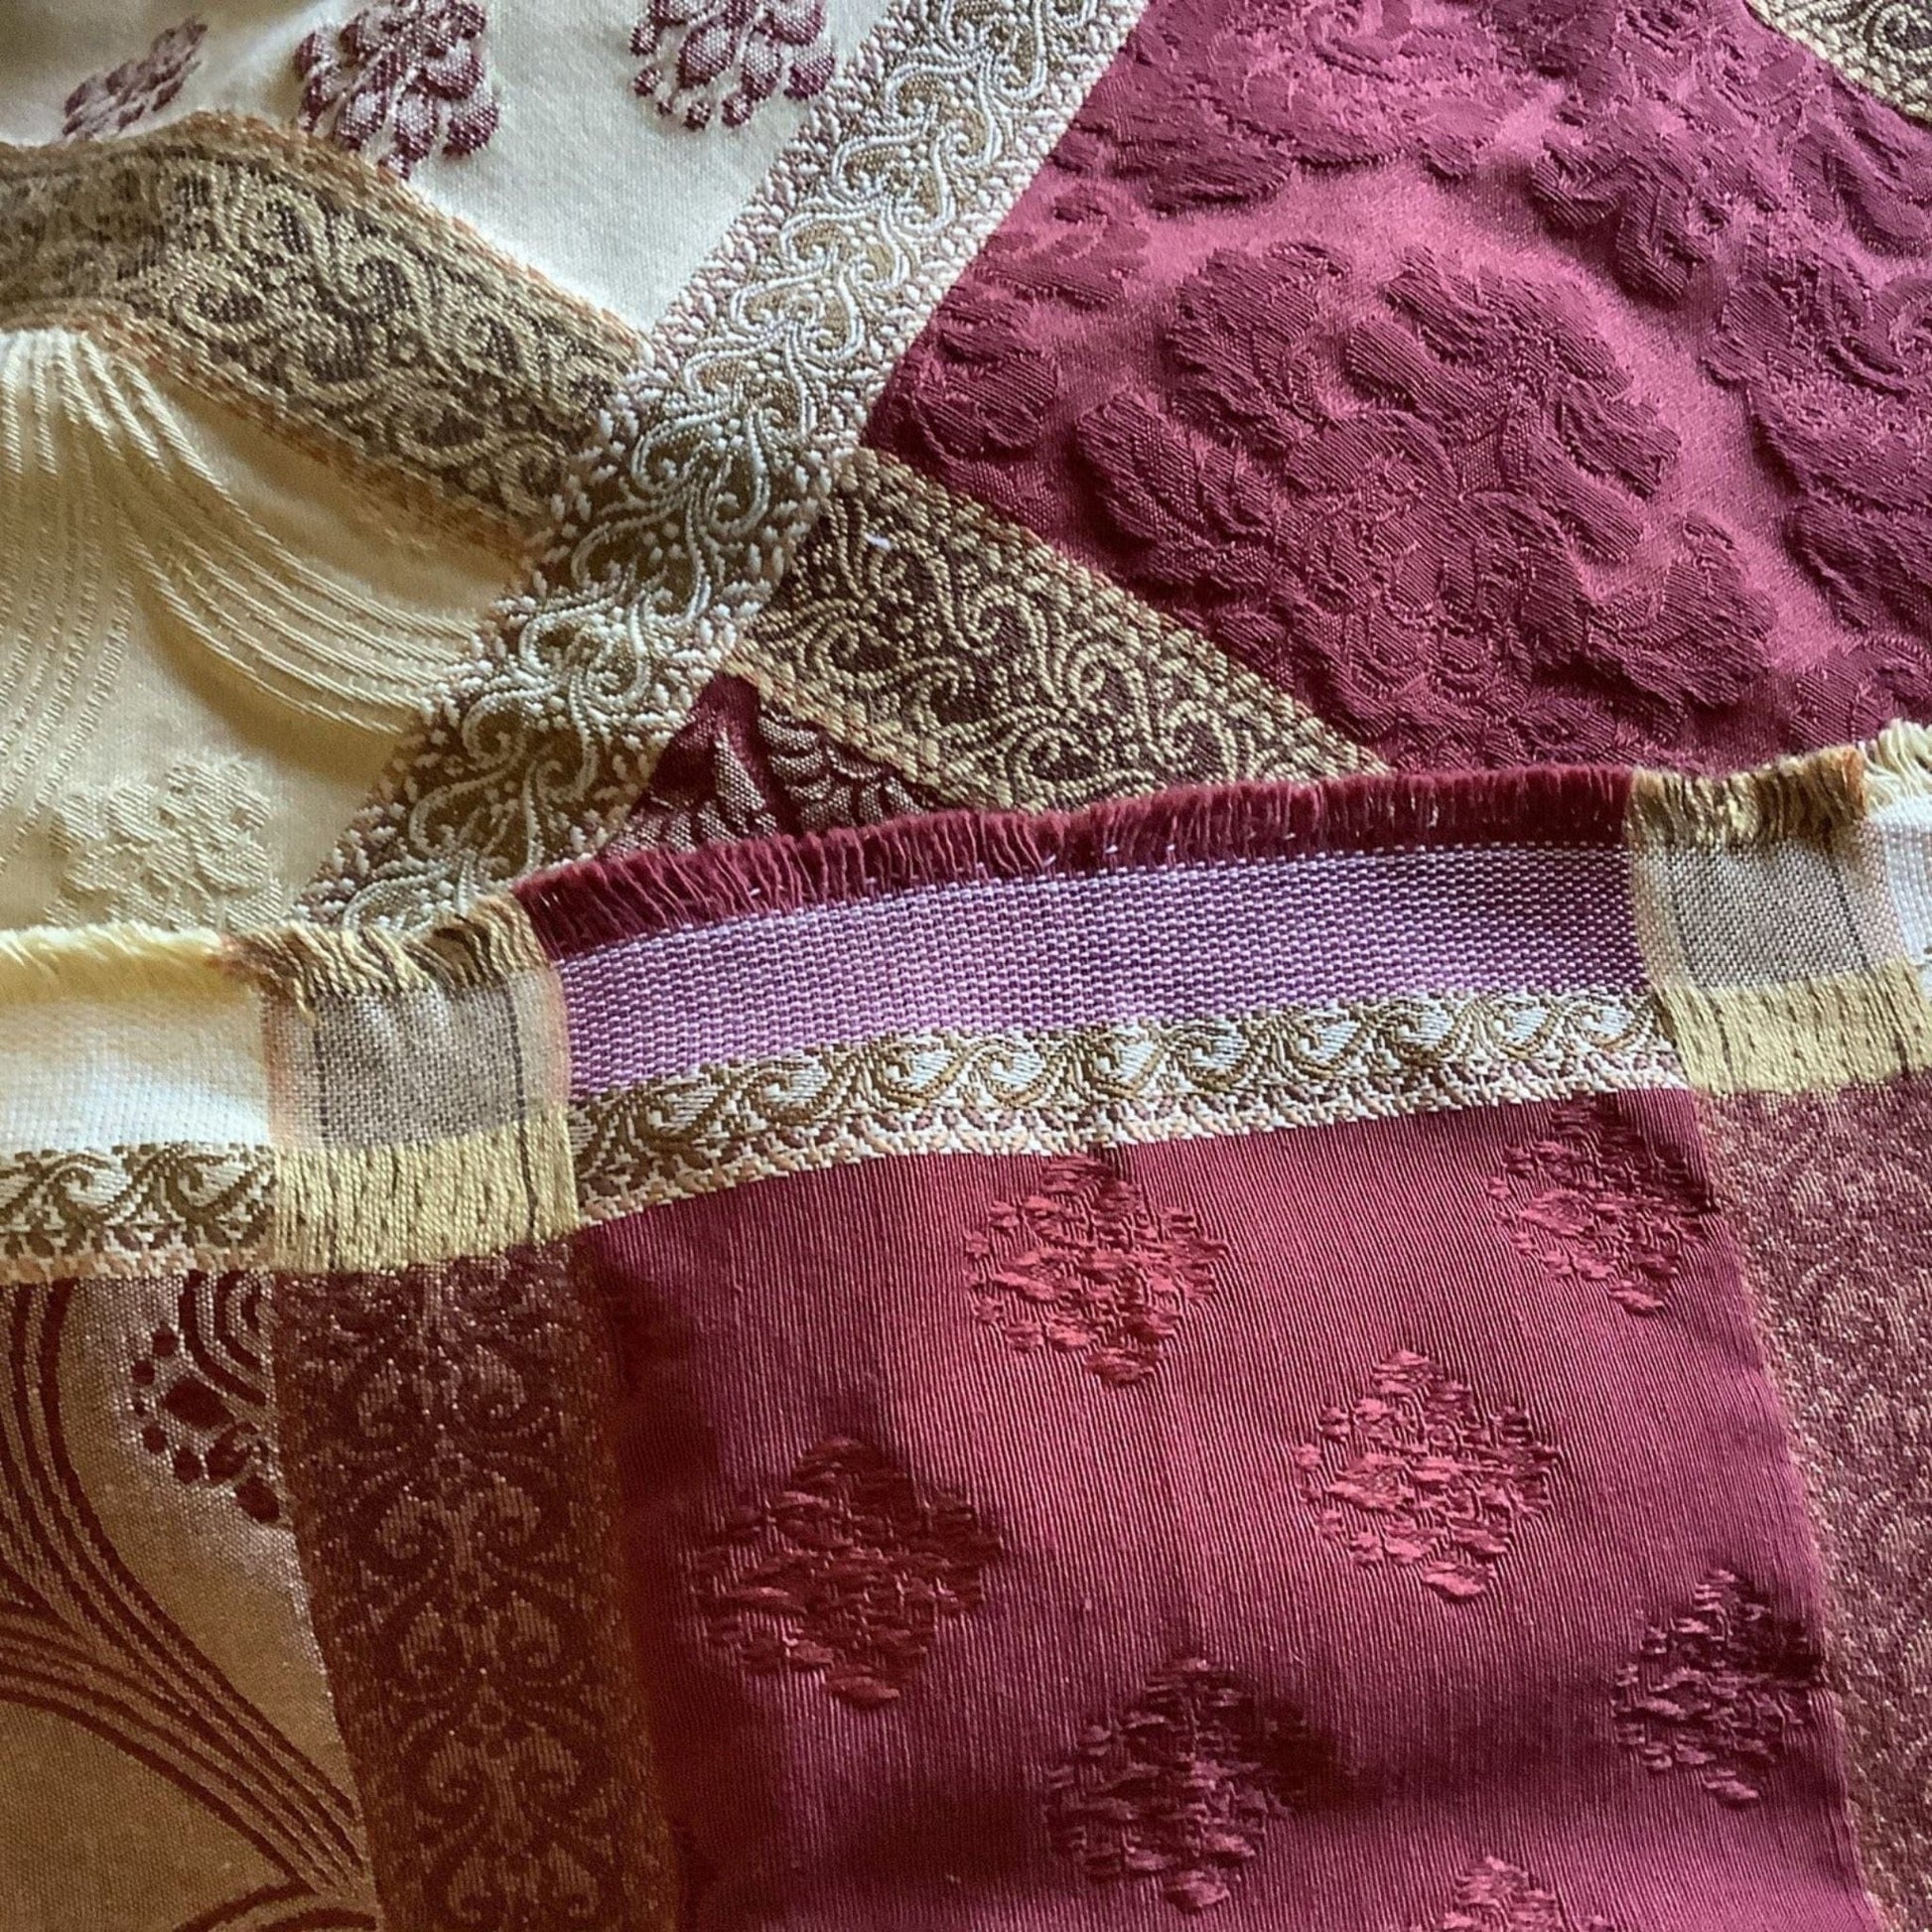 VTG Velvet Patchwork Fabric Multi / Cotton / Vintage 1990s